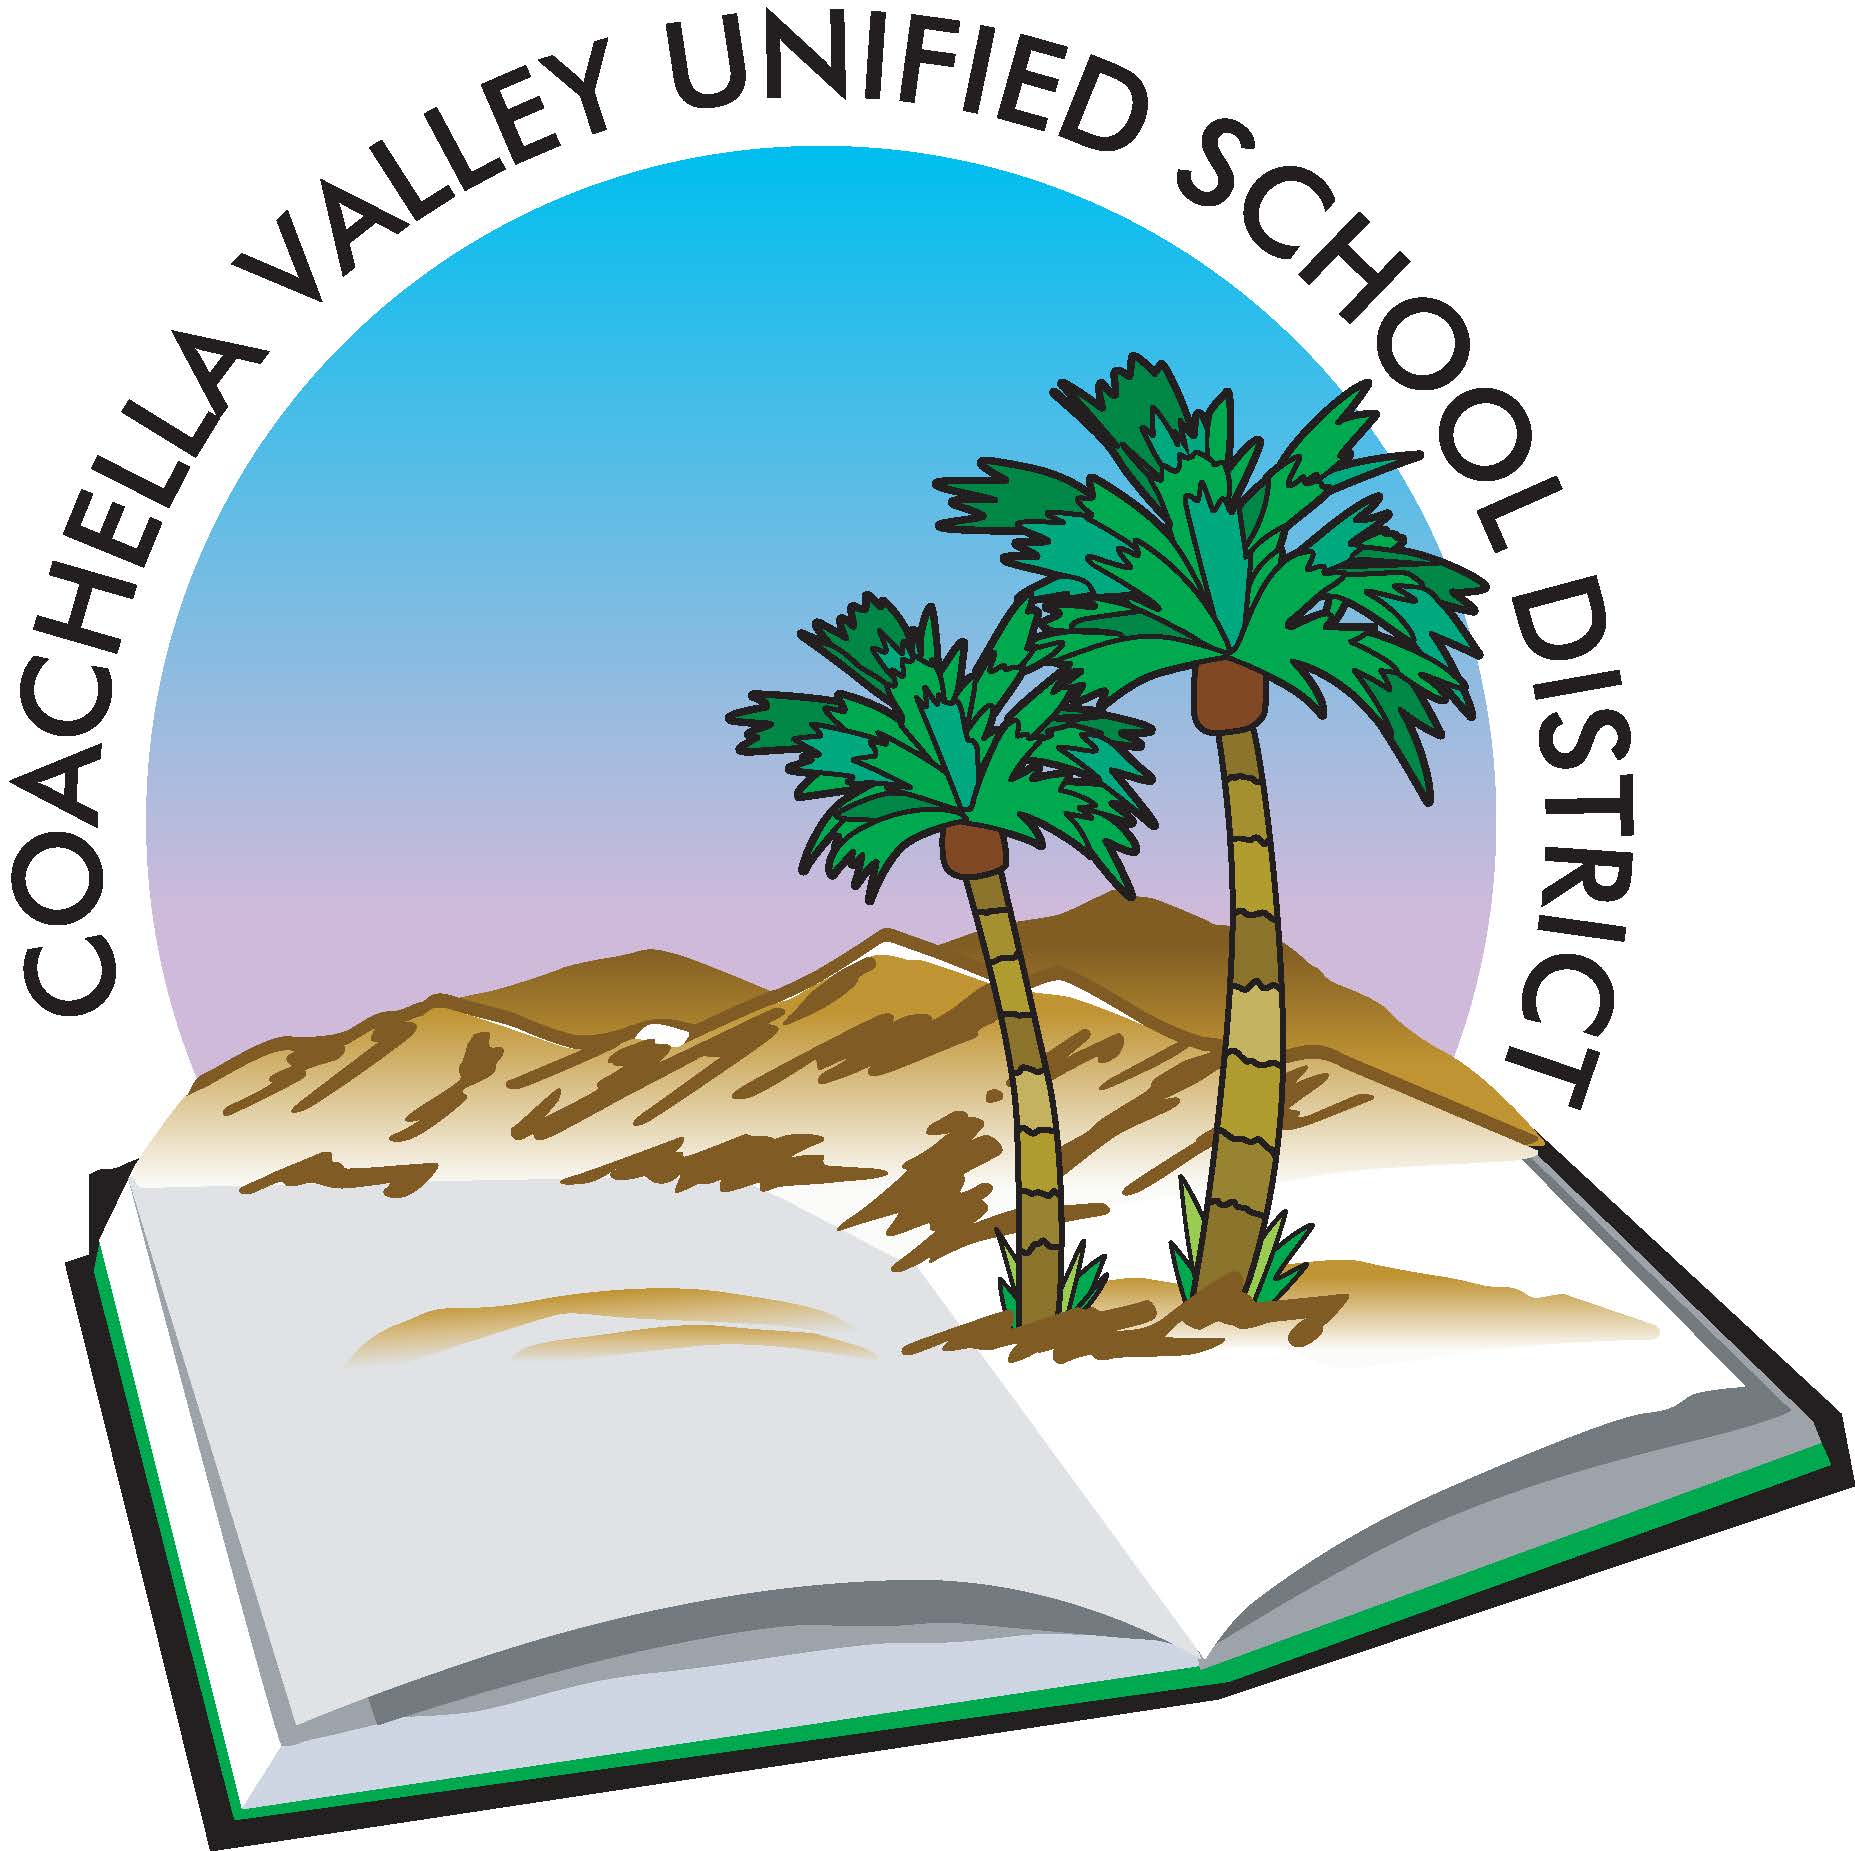 coachella logo for website.jpg